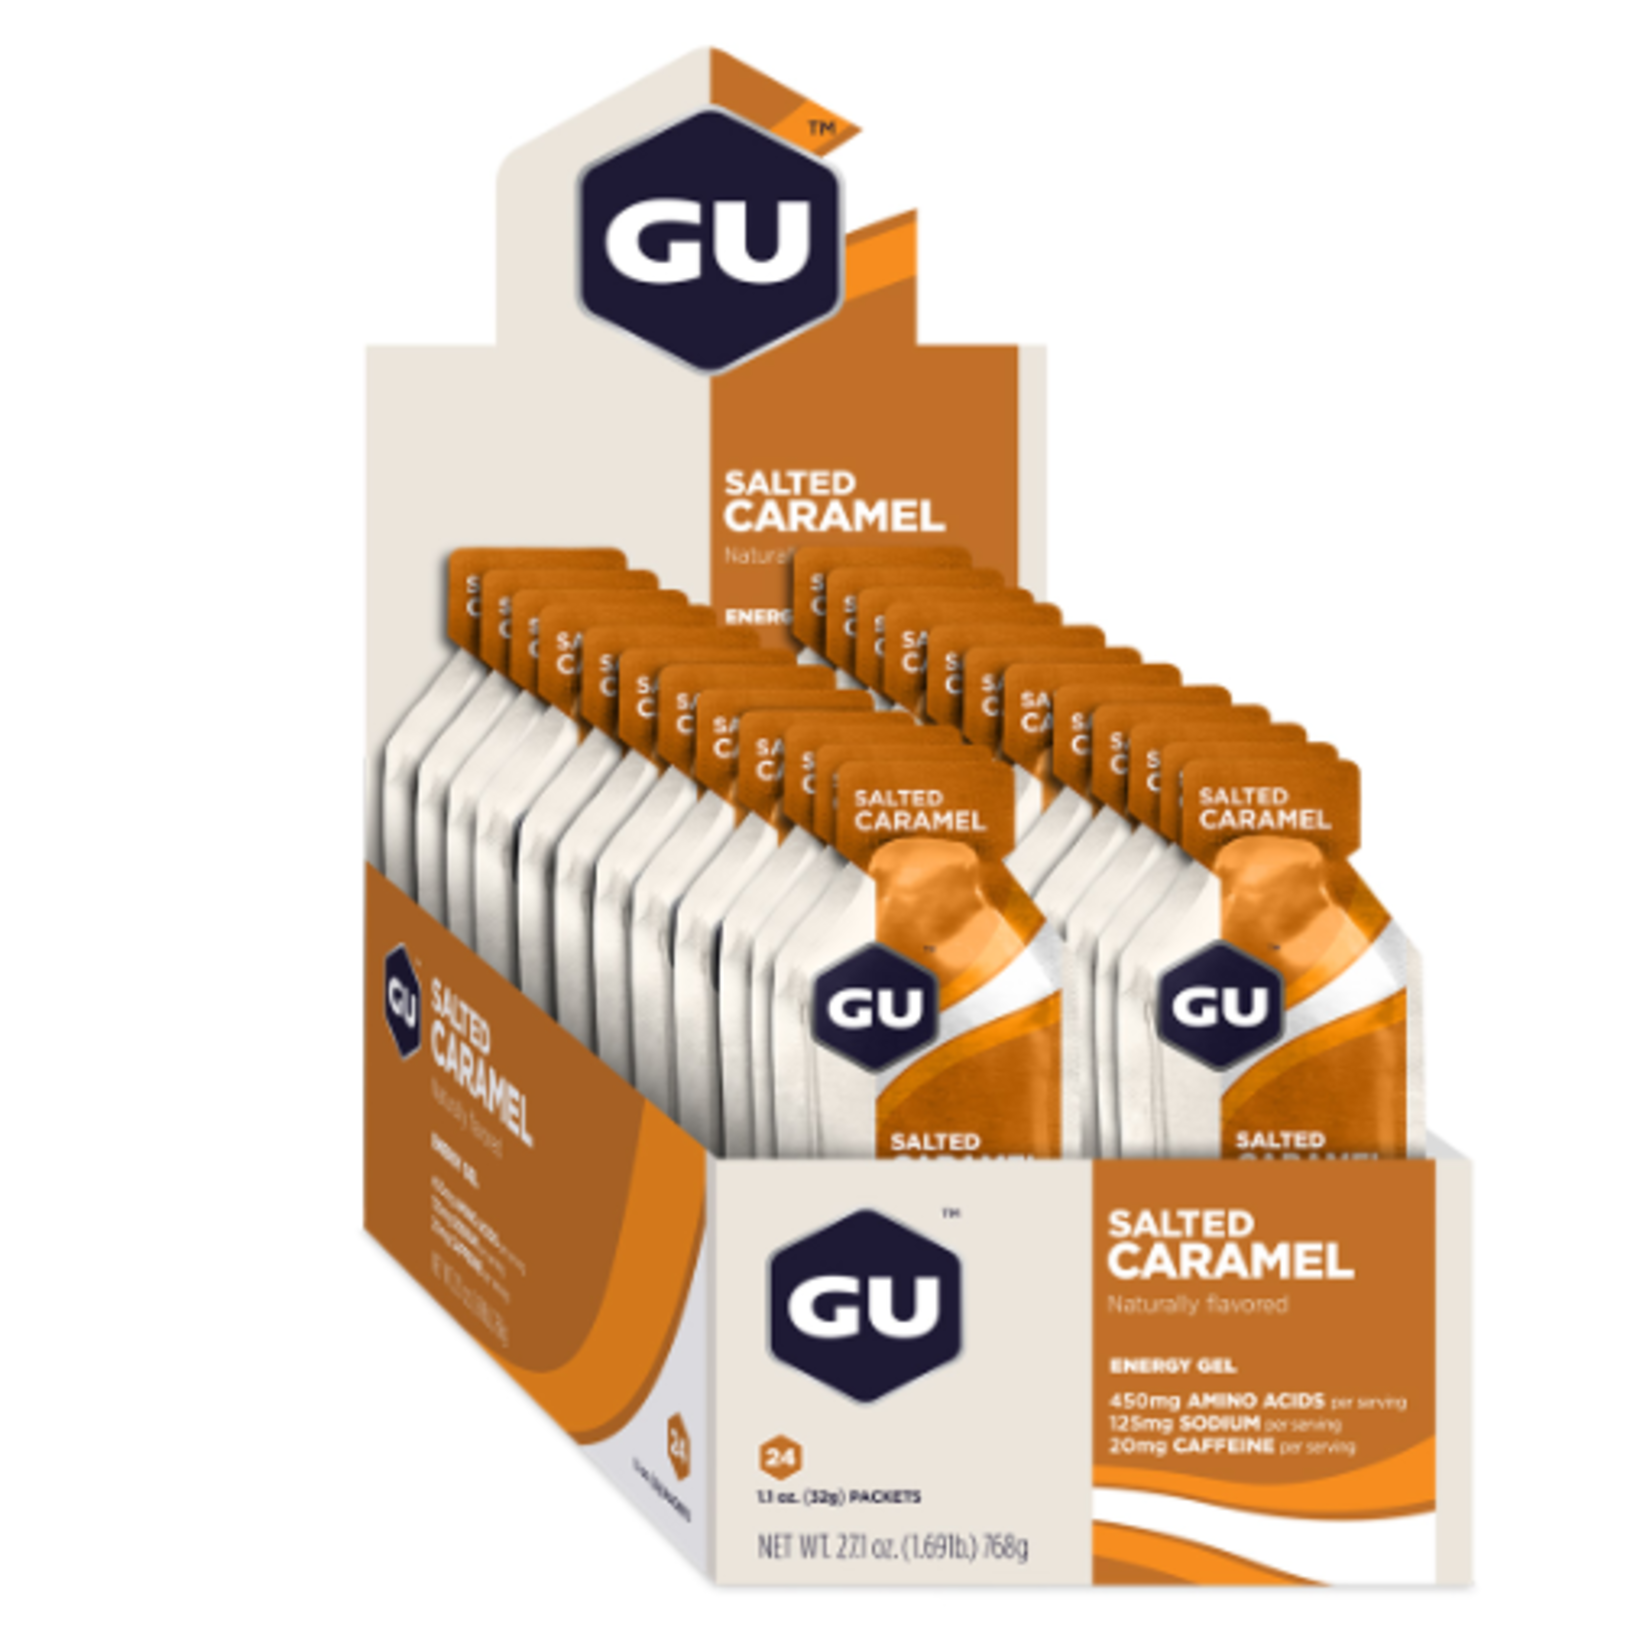 Gu GU Energy Gel - Salted Caramel, Box of 24